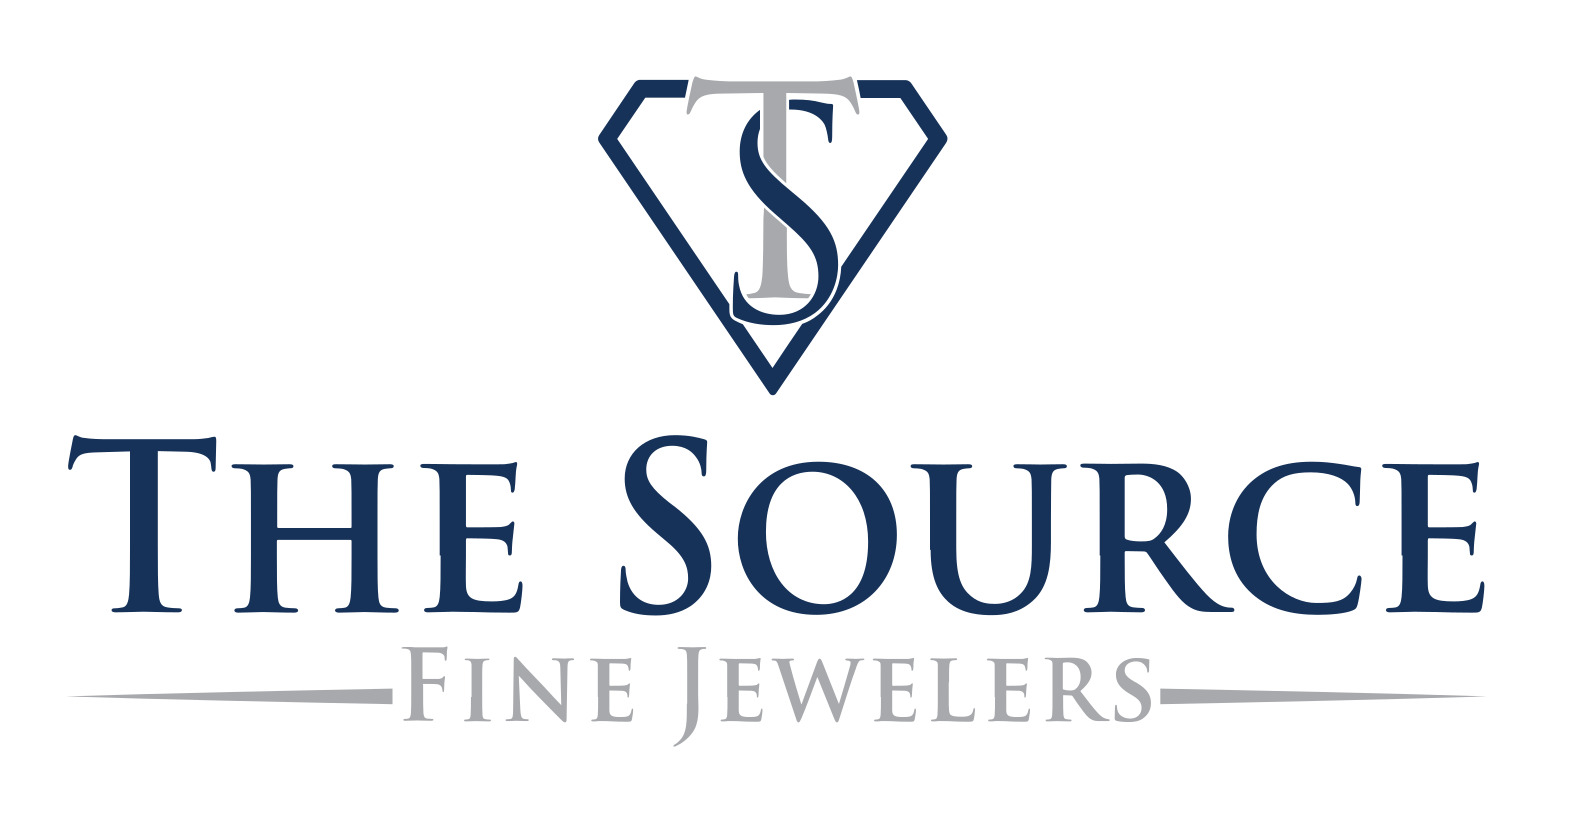 (c) Thesourcejewelers.com